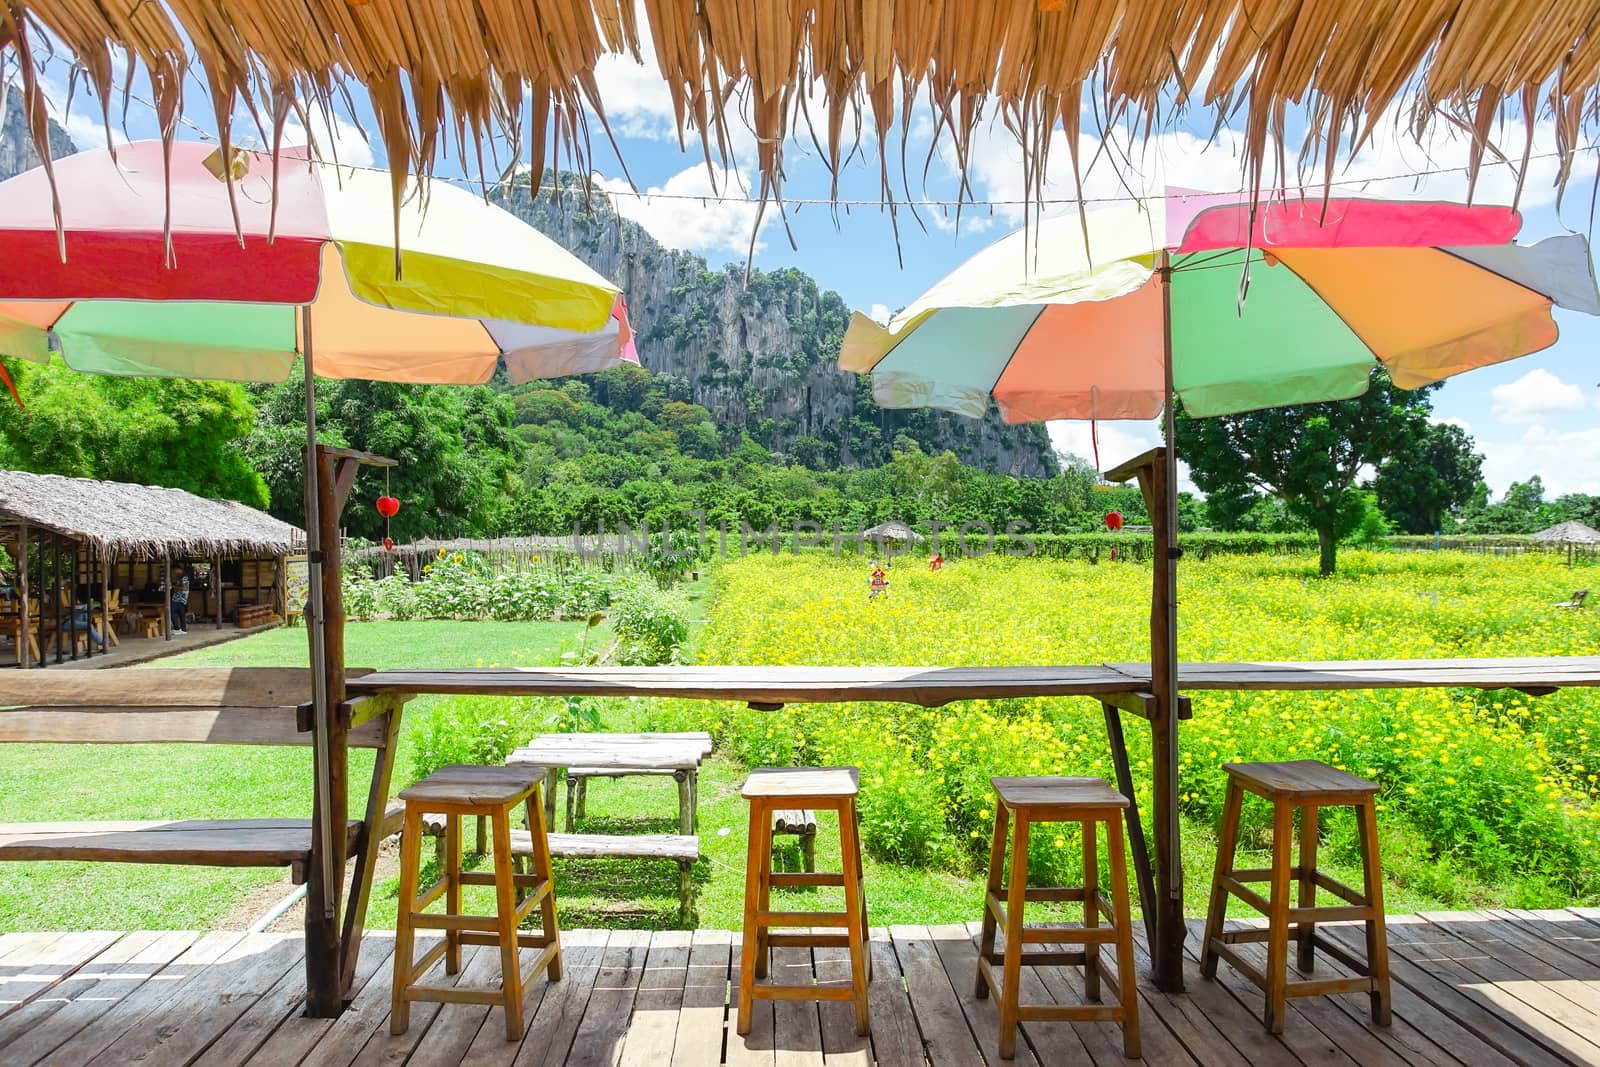 Sa Kaeo, Thailand - July 17, 2020: Beautiful scenery at the popular coffee cafe named Woodhouse Khao Chakan in Khao Chakan District, Sa Kaeo Province, Thailand.